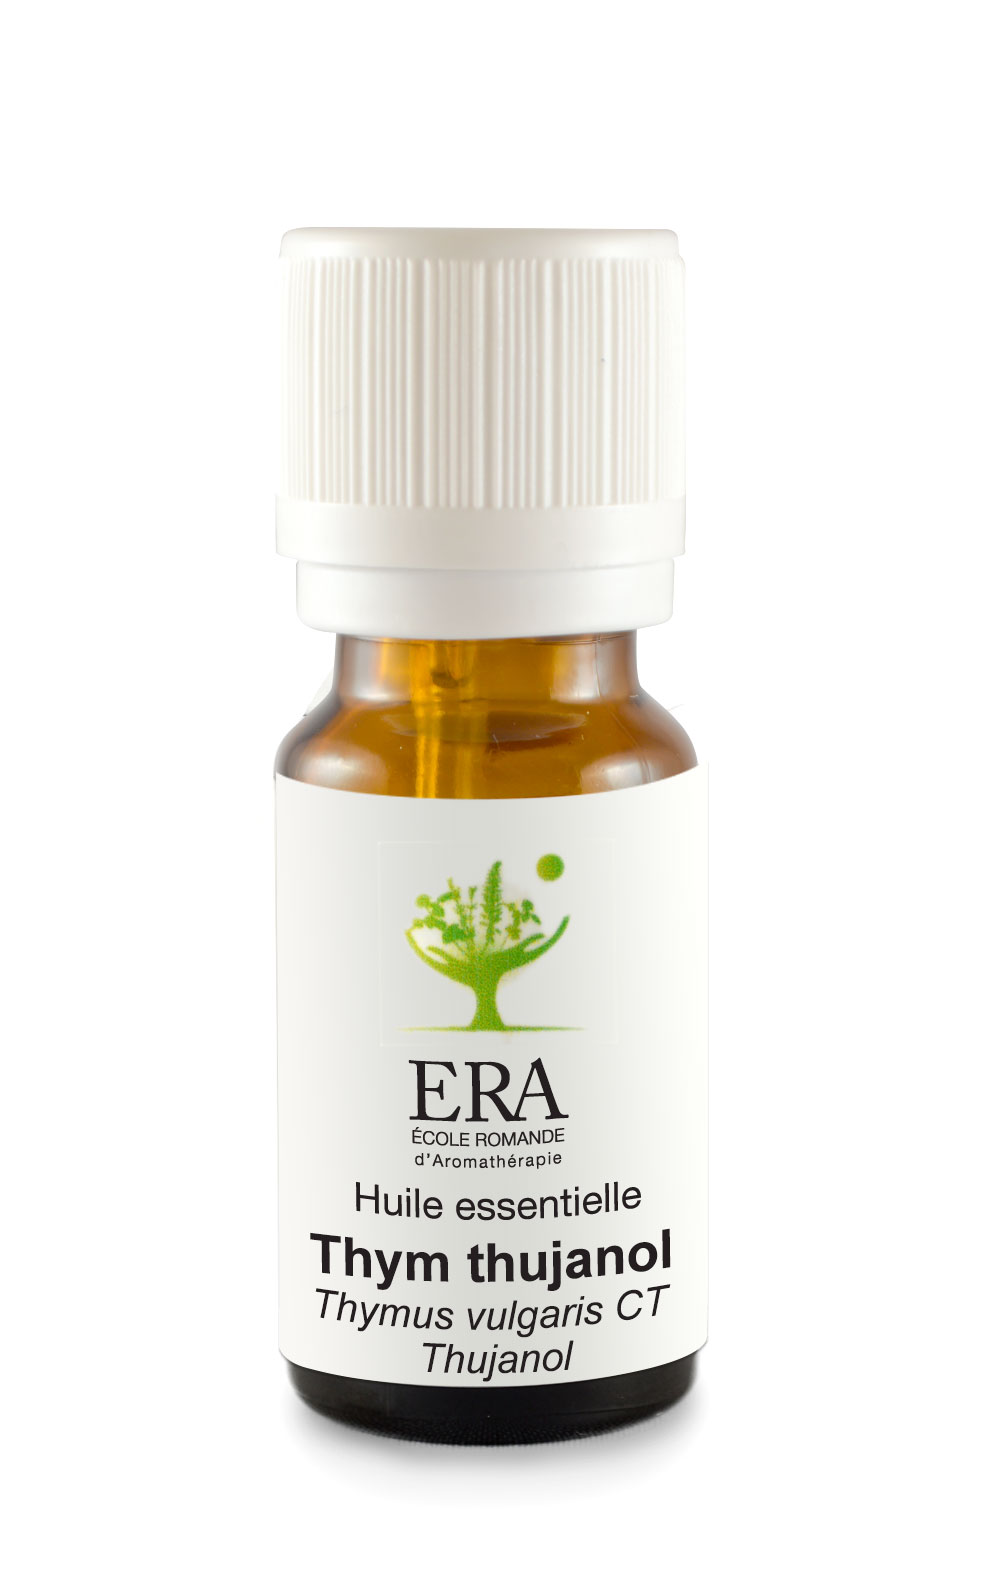 Thym thujanol - Thymus vulgaris CT thujanol - Lamiacées